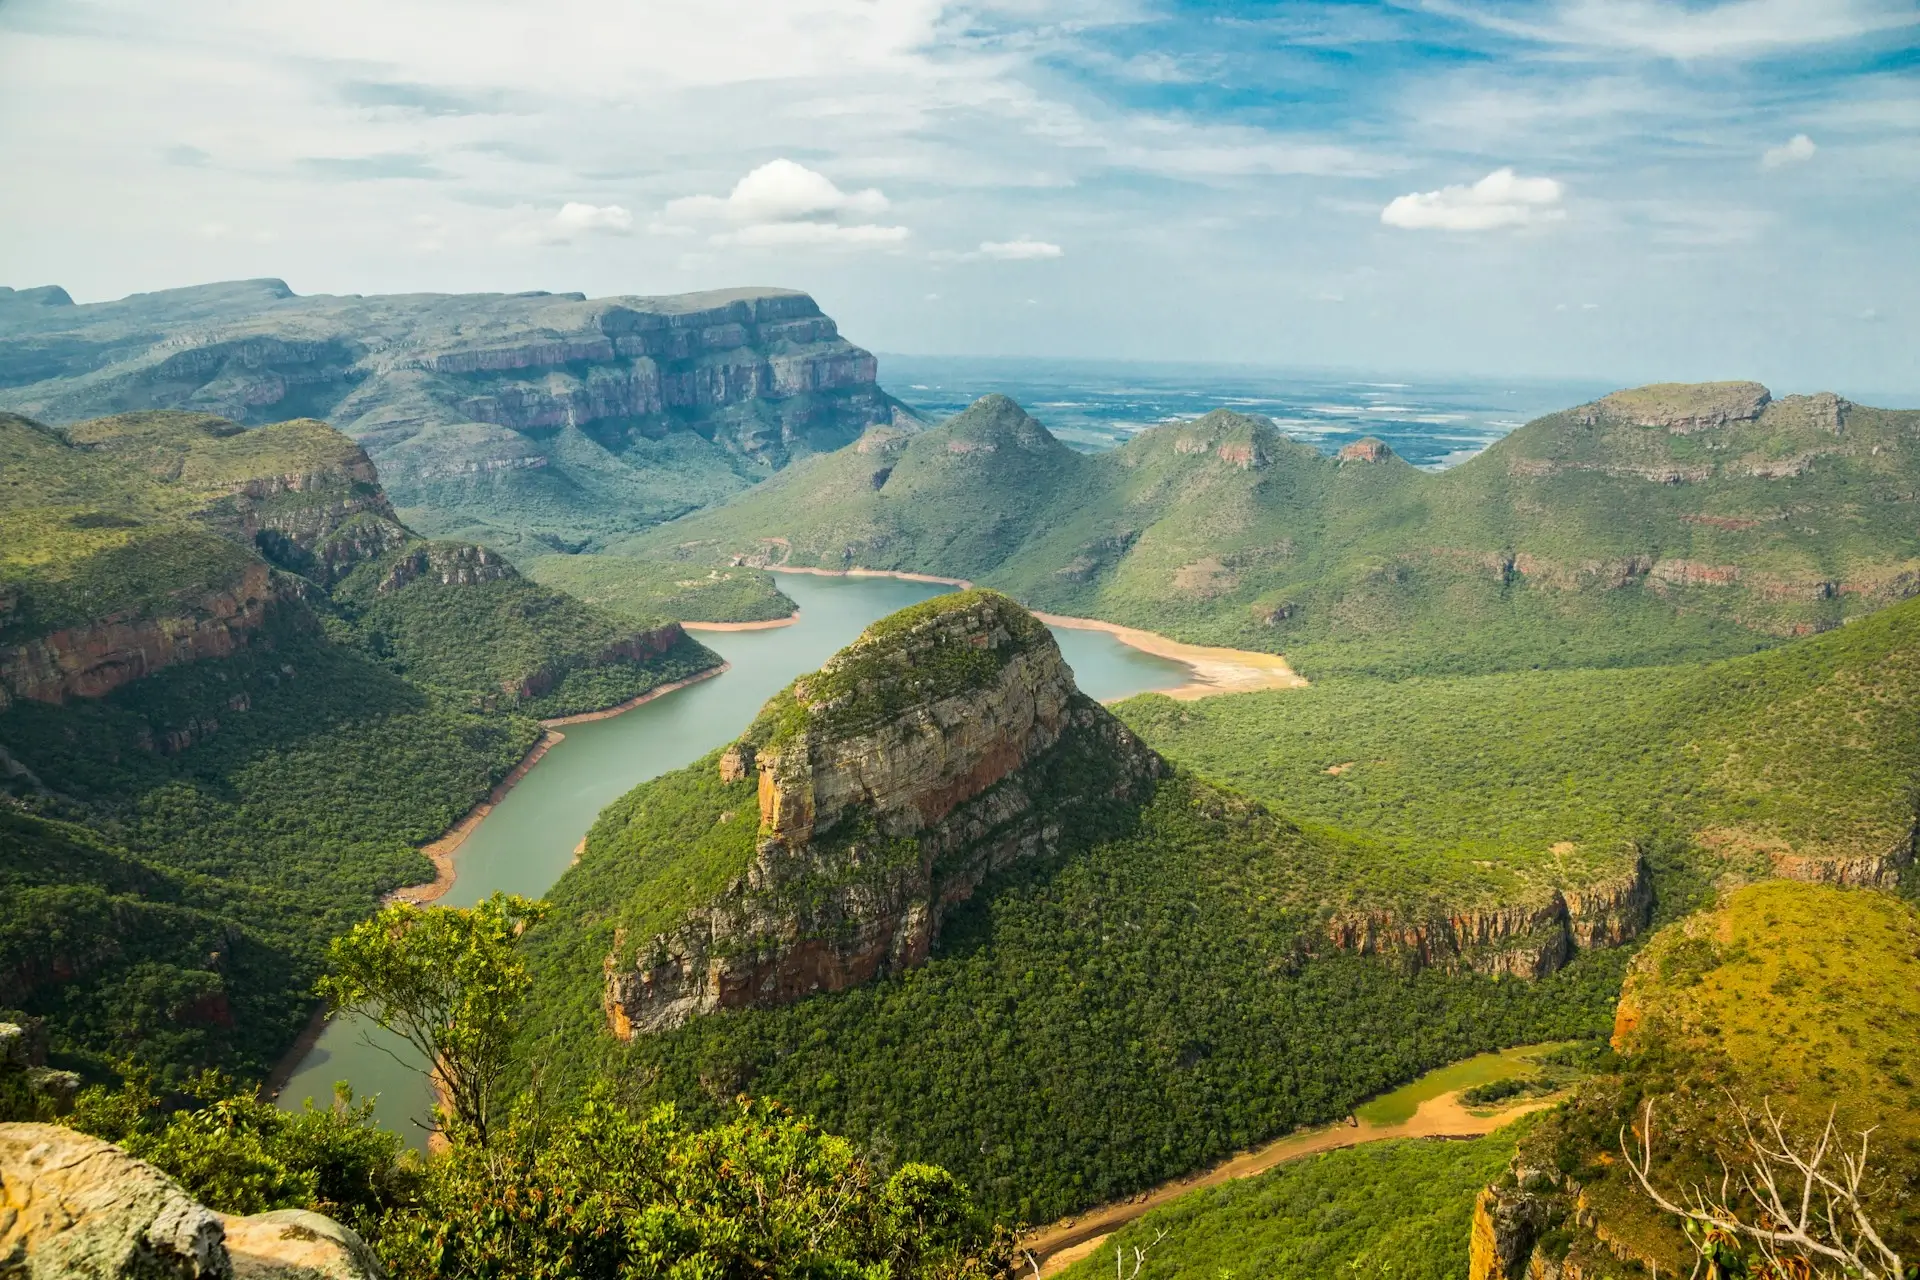 South Africa's National Biodiversity Economy Strategy